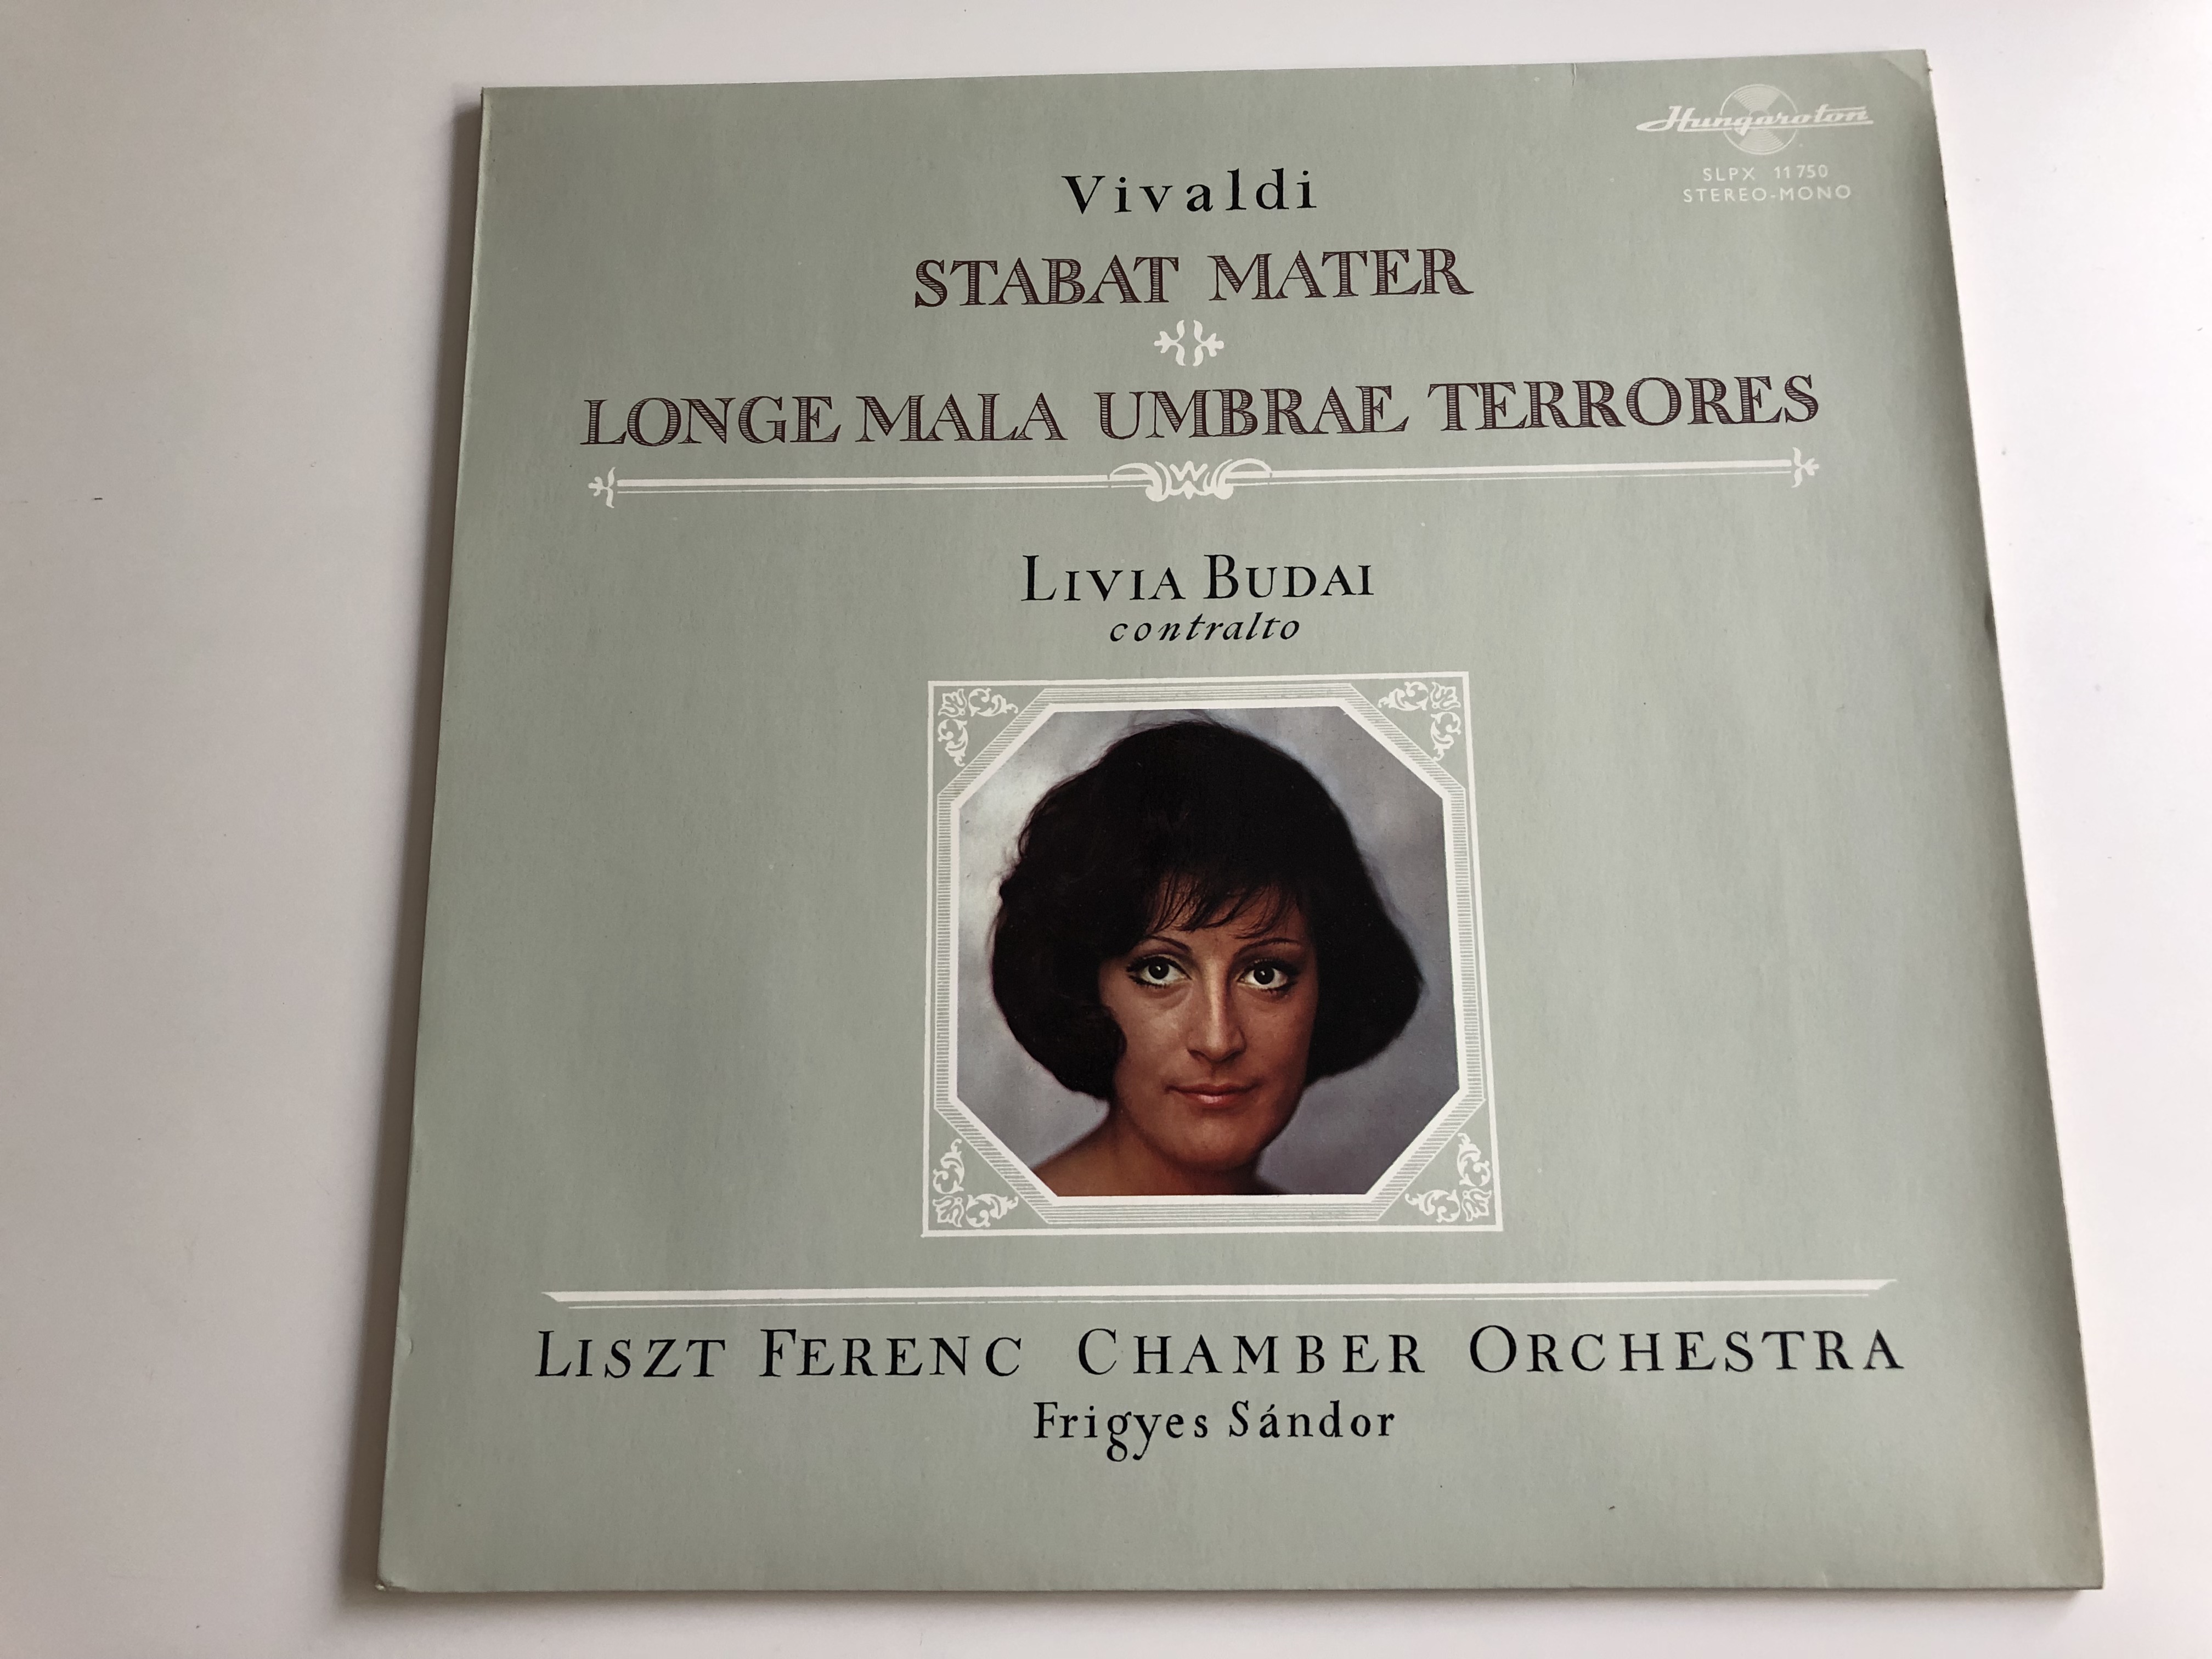 vivaldi-stabat-mater-longe-mala-umbrae-terrores-conducted-frigyes-s-ndor-livia-budai-liszt-ferenc-chamber-orchestra-hungaroton-lp-stereo-mono-slpx-11750-1-.jpg